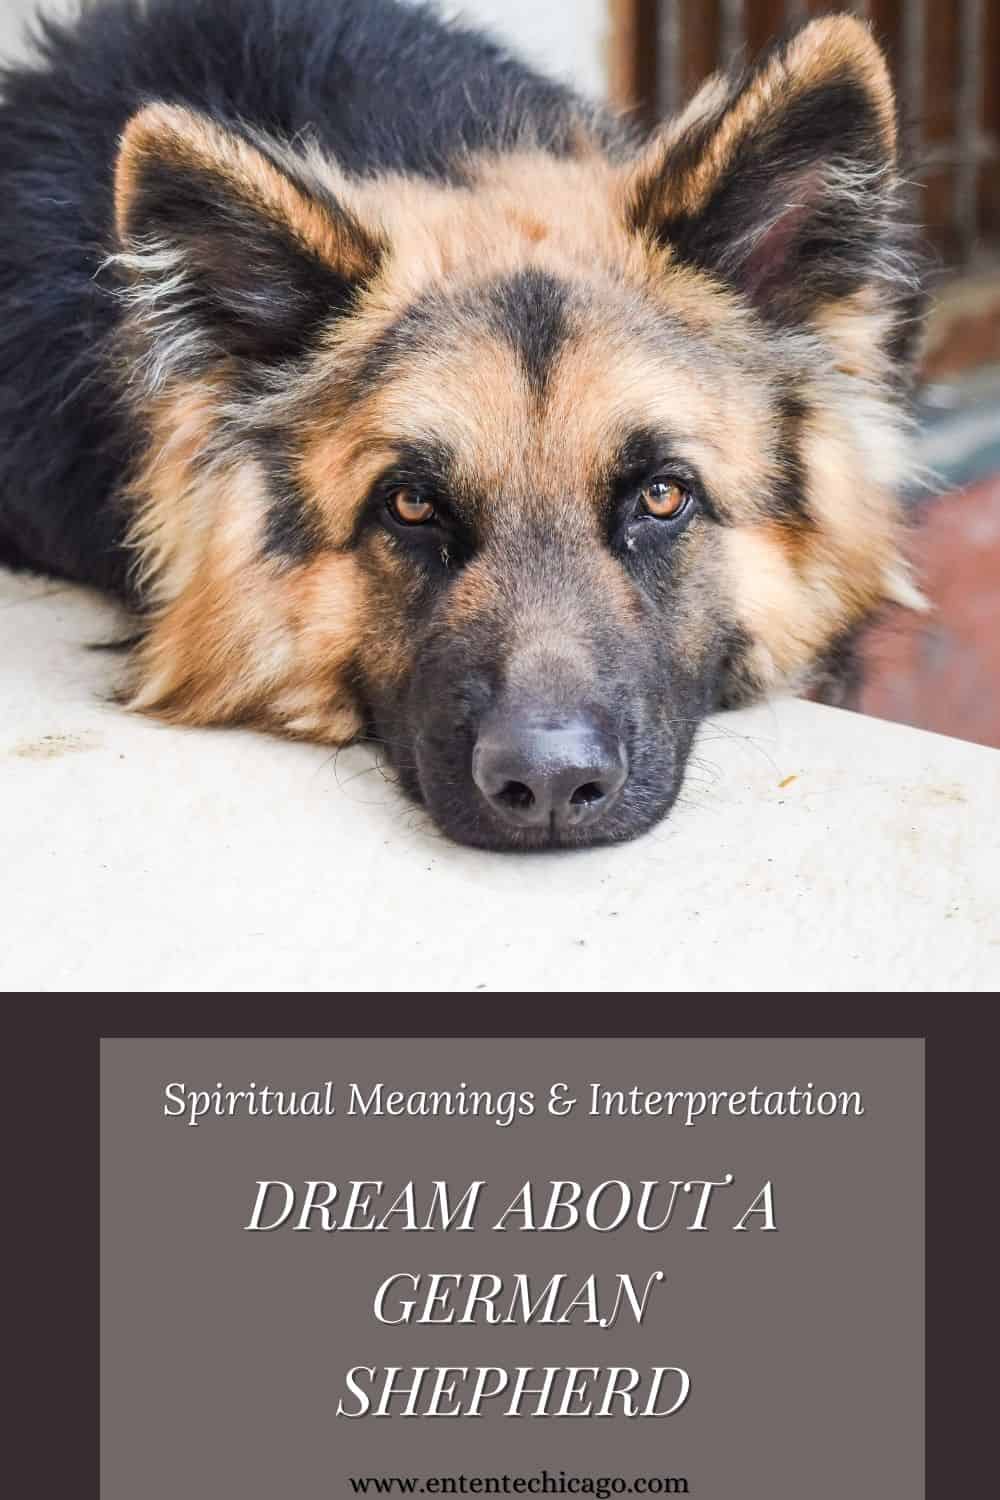 Dream About A German Shepherd (Spiritual Meanings & Interpretation)